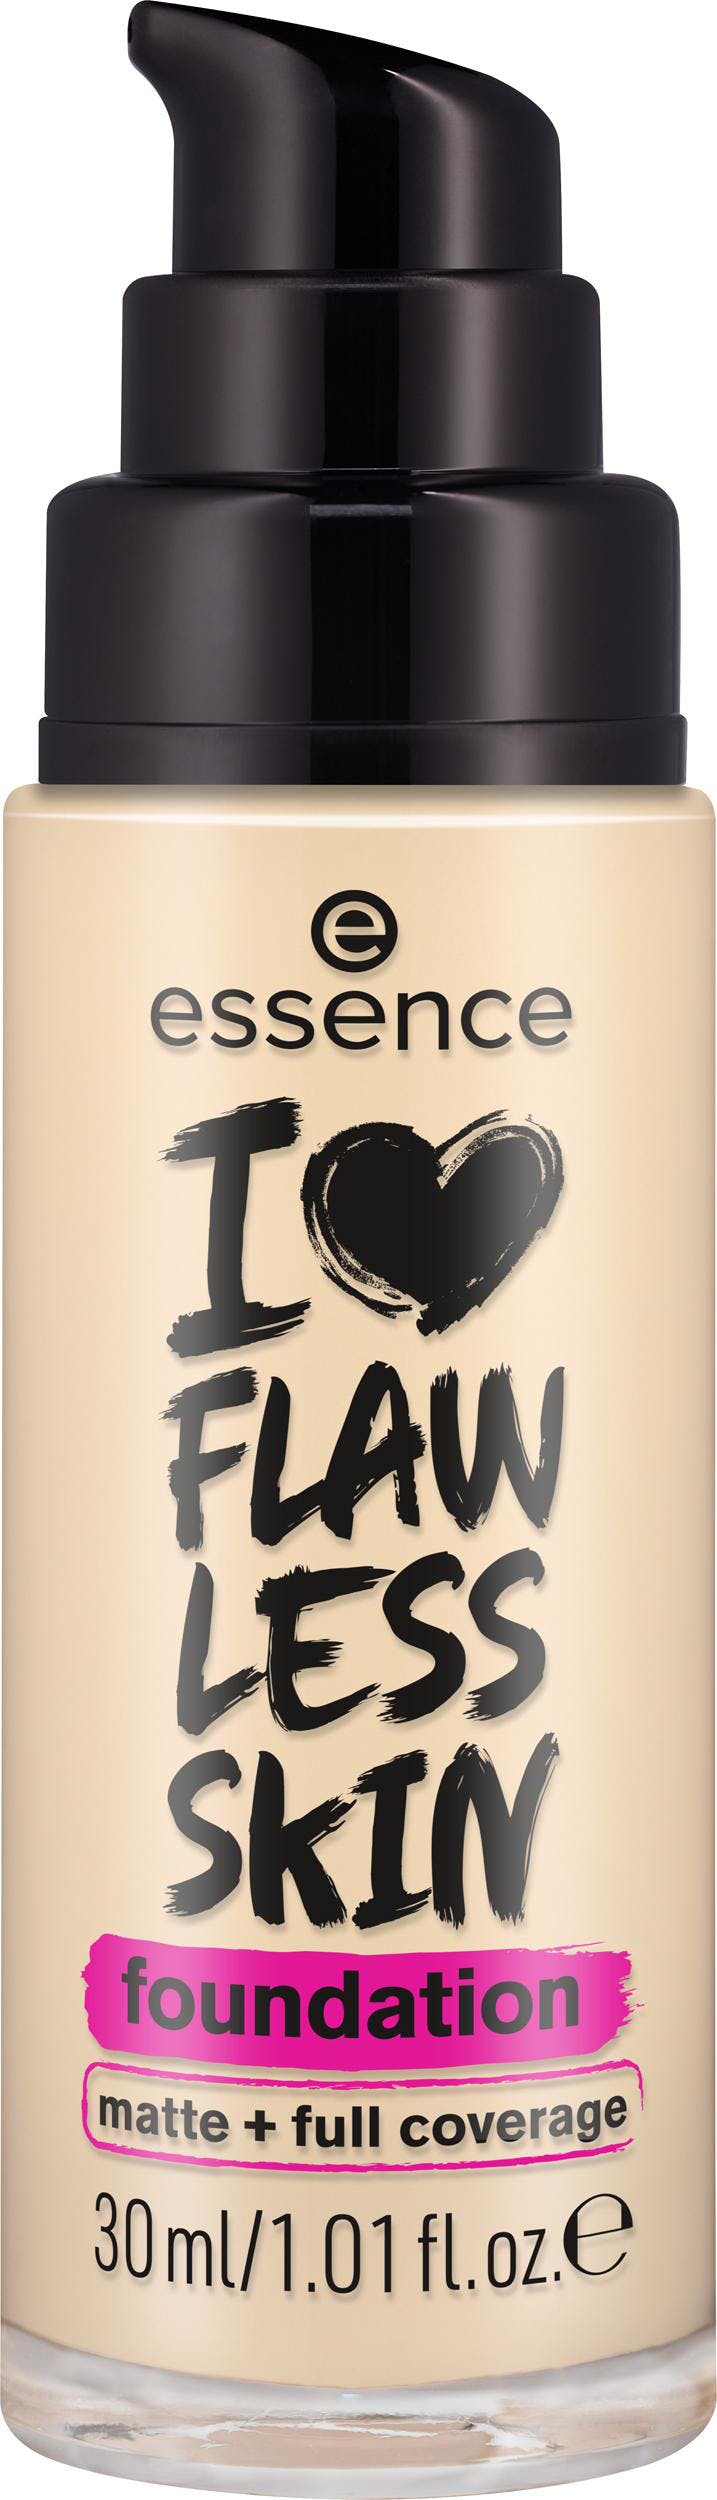 essence I LOVE FLAWLESS SKIN matt + full coverage Flüssige Foundation